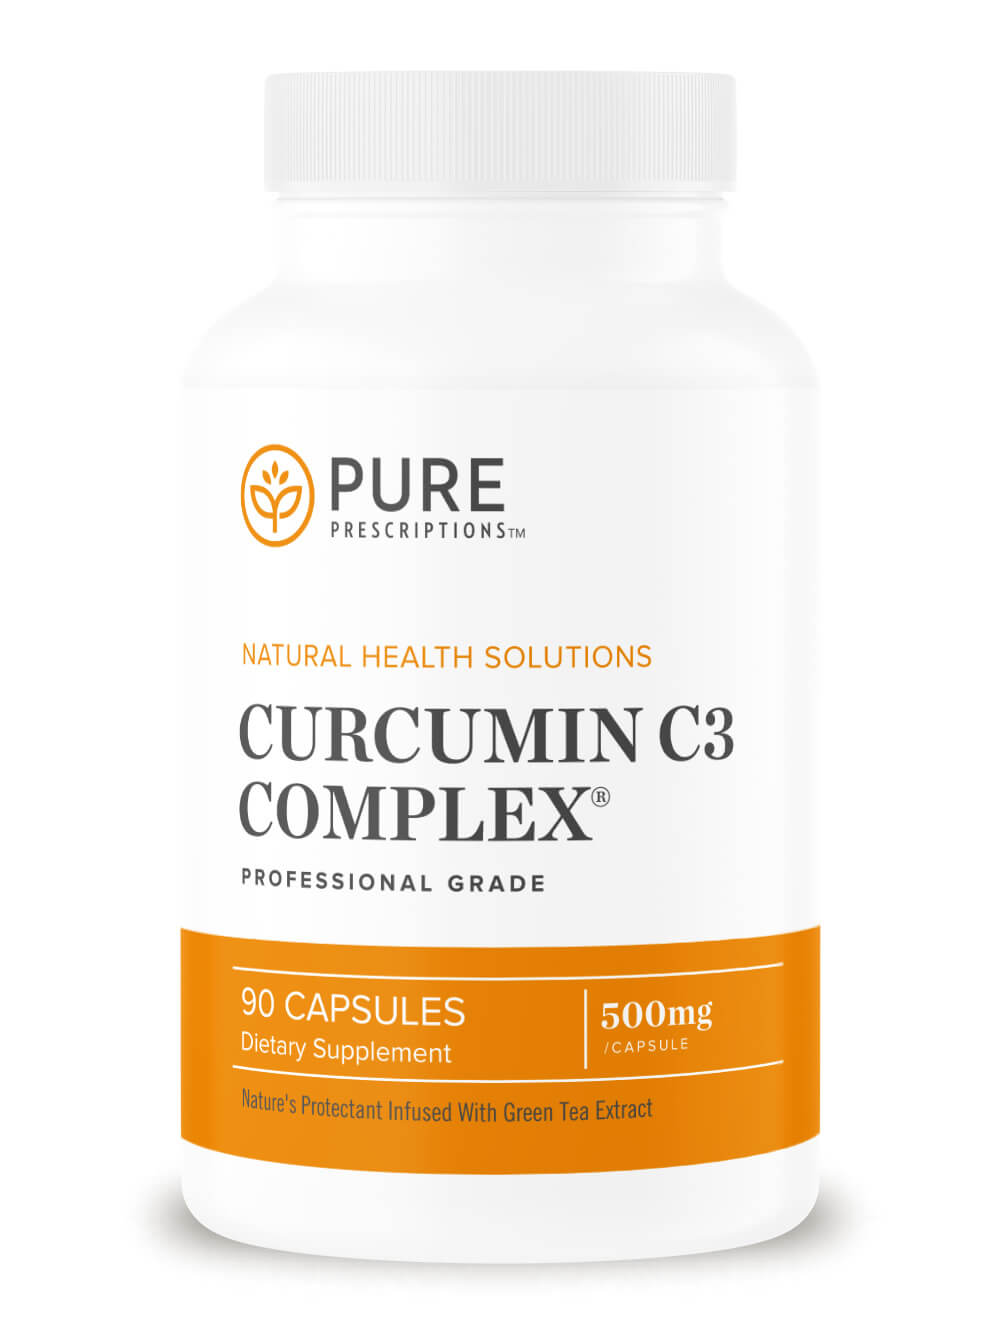 Curcumin C3 Complex® by Pure Prescriptions